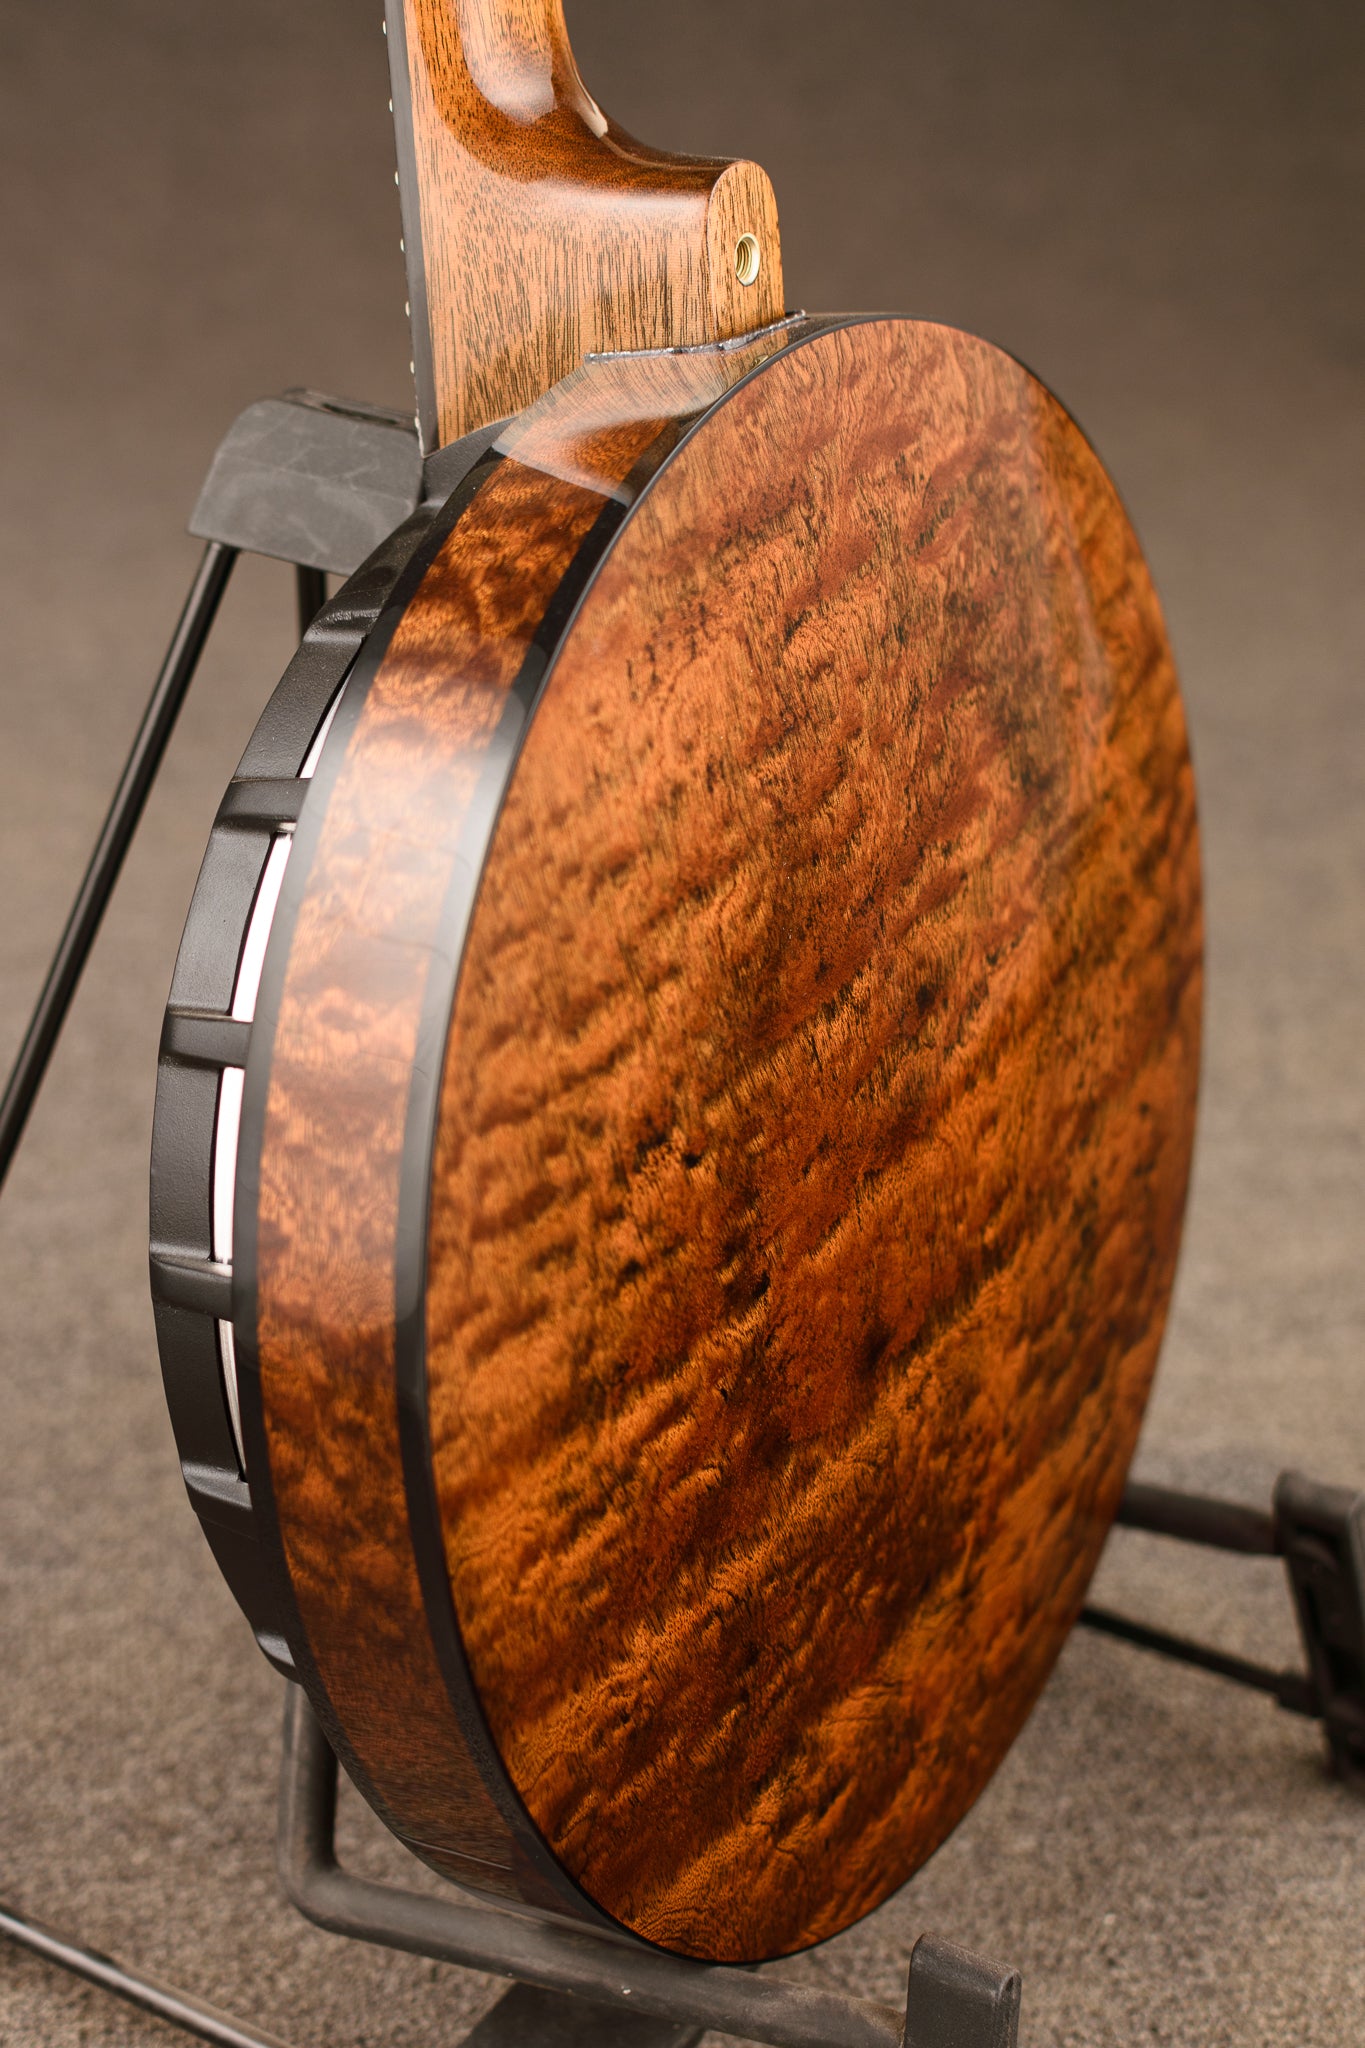 Nechville Mahogany Phantom Banjo w/ Quilted Mahogany Resonator Bluegrass Banjo